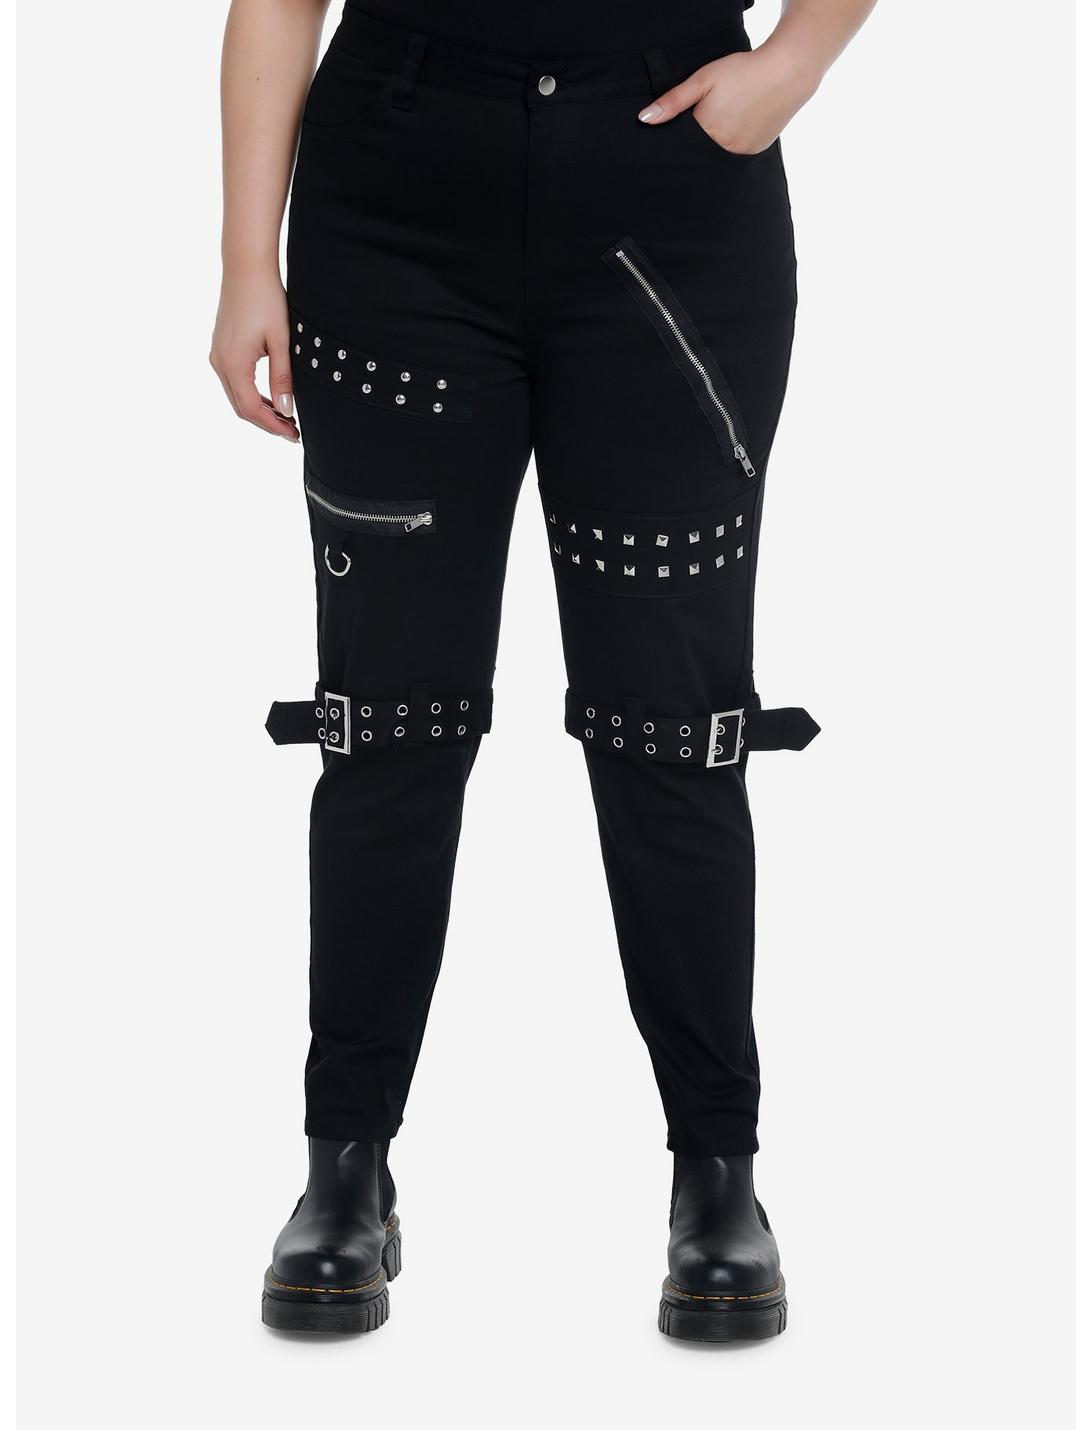 Black Grommet Zipper Super Skinny Jeans Plus Size, BLACK, hi-res